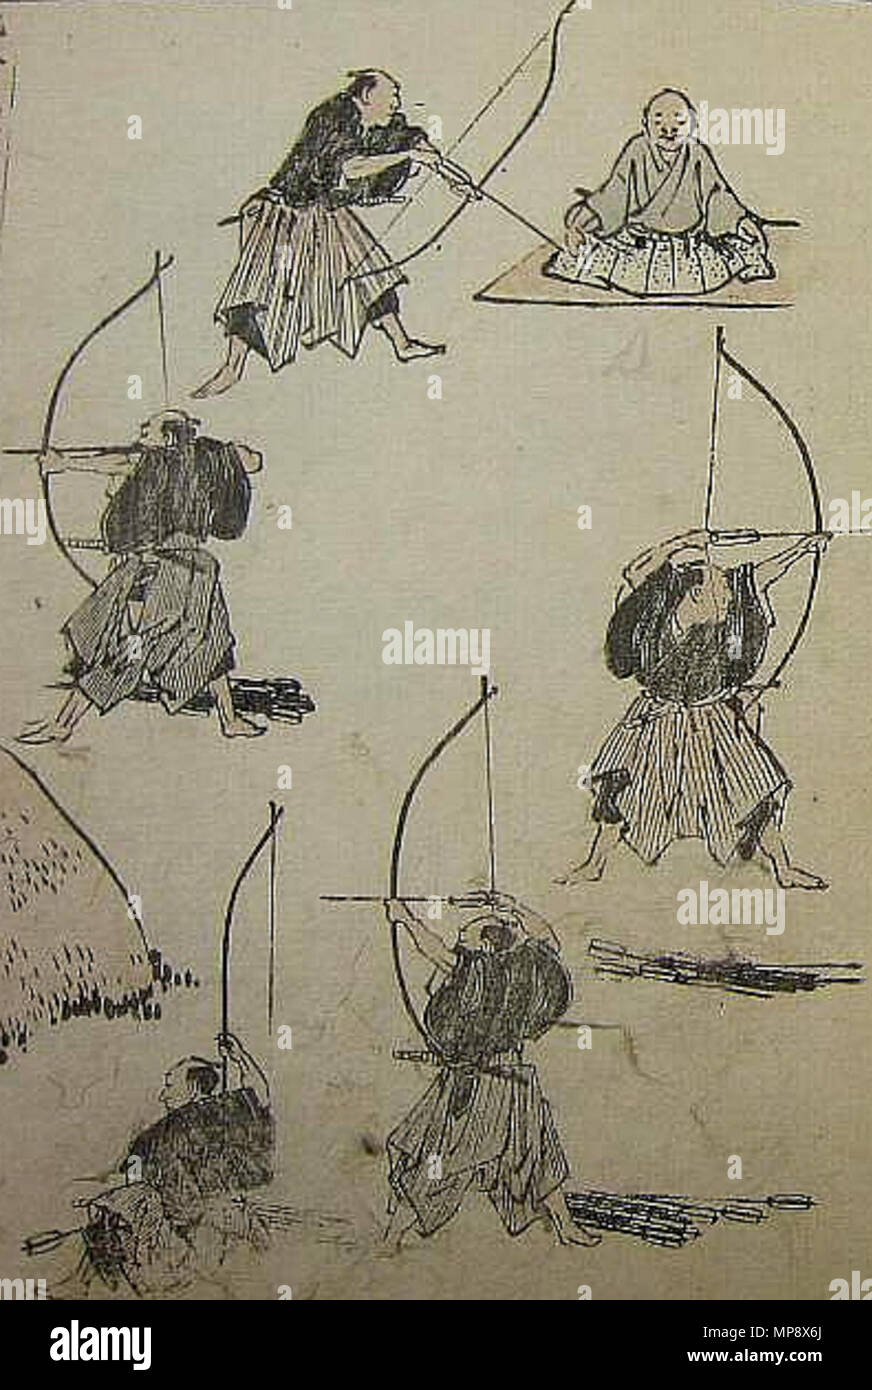 Katsushika hokusai hi-res stock photography and images - Page 3 - Alamy